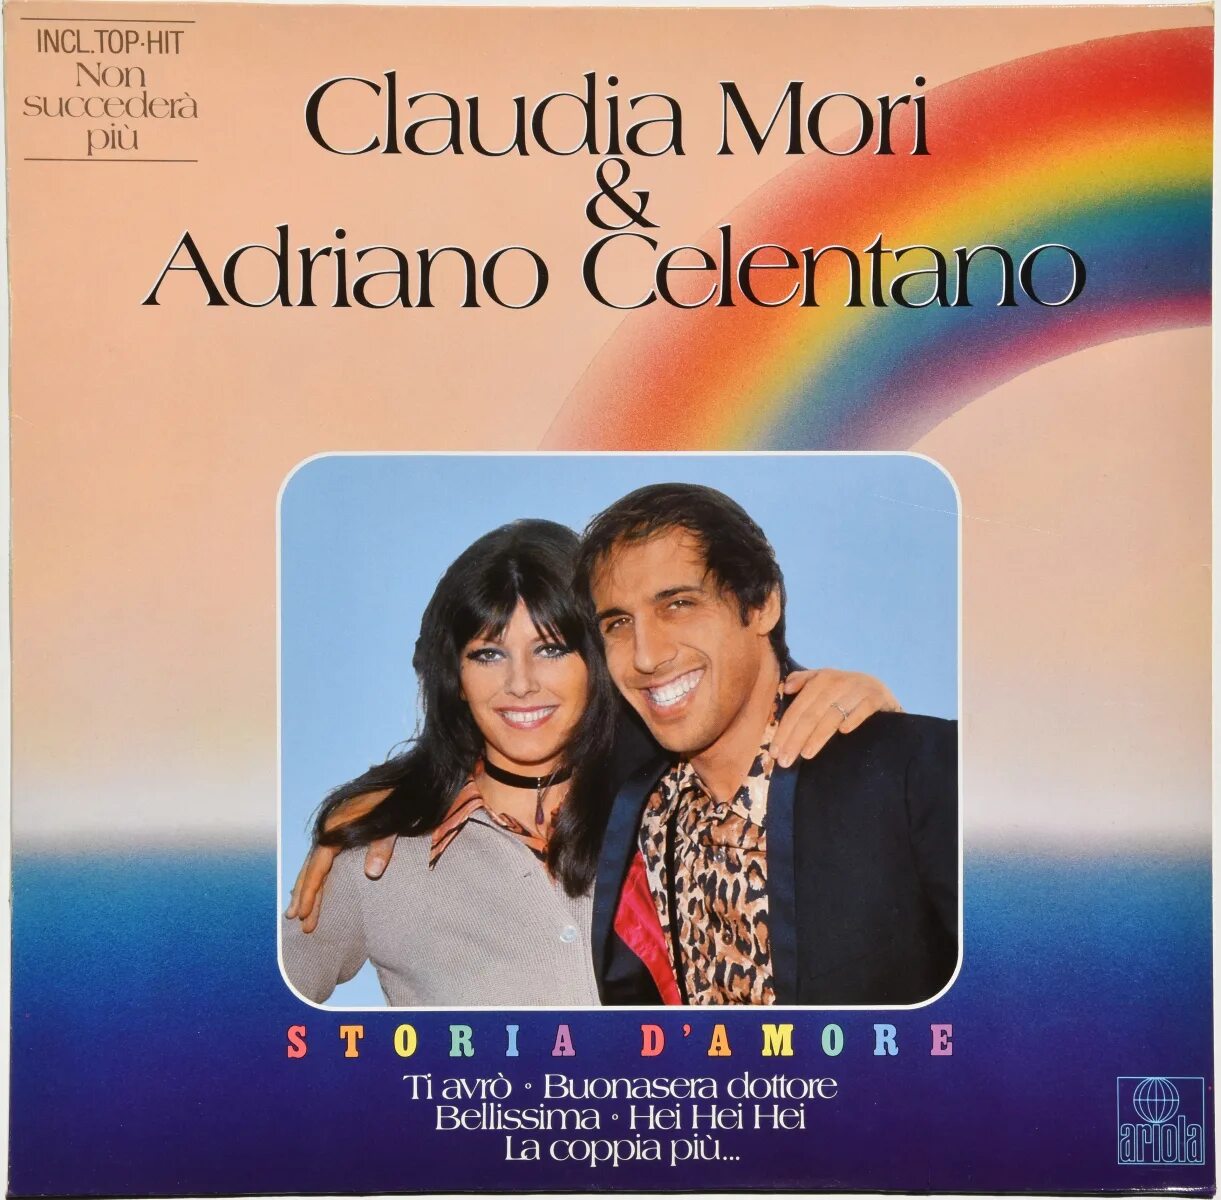 Storia d amore. Клаудия Мори non succedera. Claudia Mori 1982. Клаудиа Мори и Челентано. Адриано Челентано storia d'Amore.